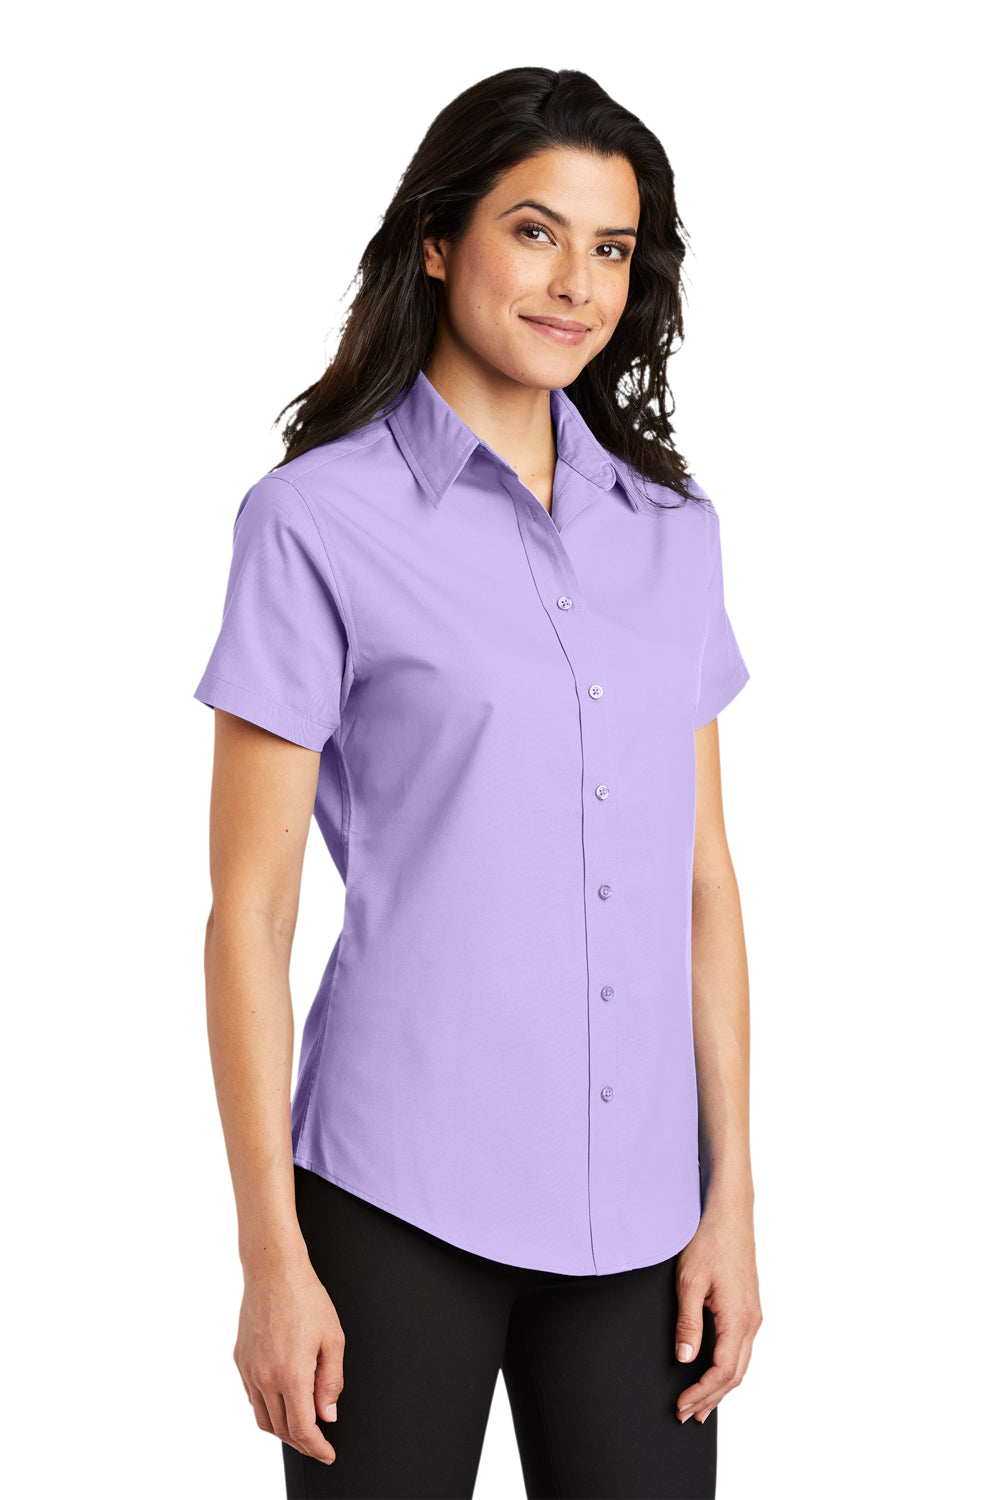 Port Authority L508 Womens Easy Care Wrinkle Resistant Short Sleeve Button Down Shirt Bright Lavender Purple 3Q